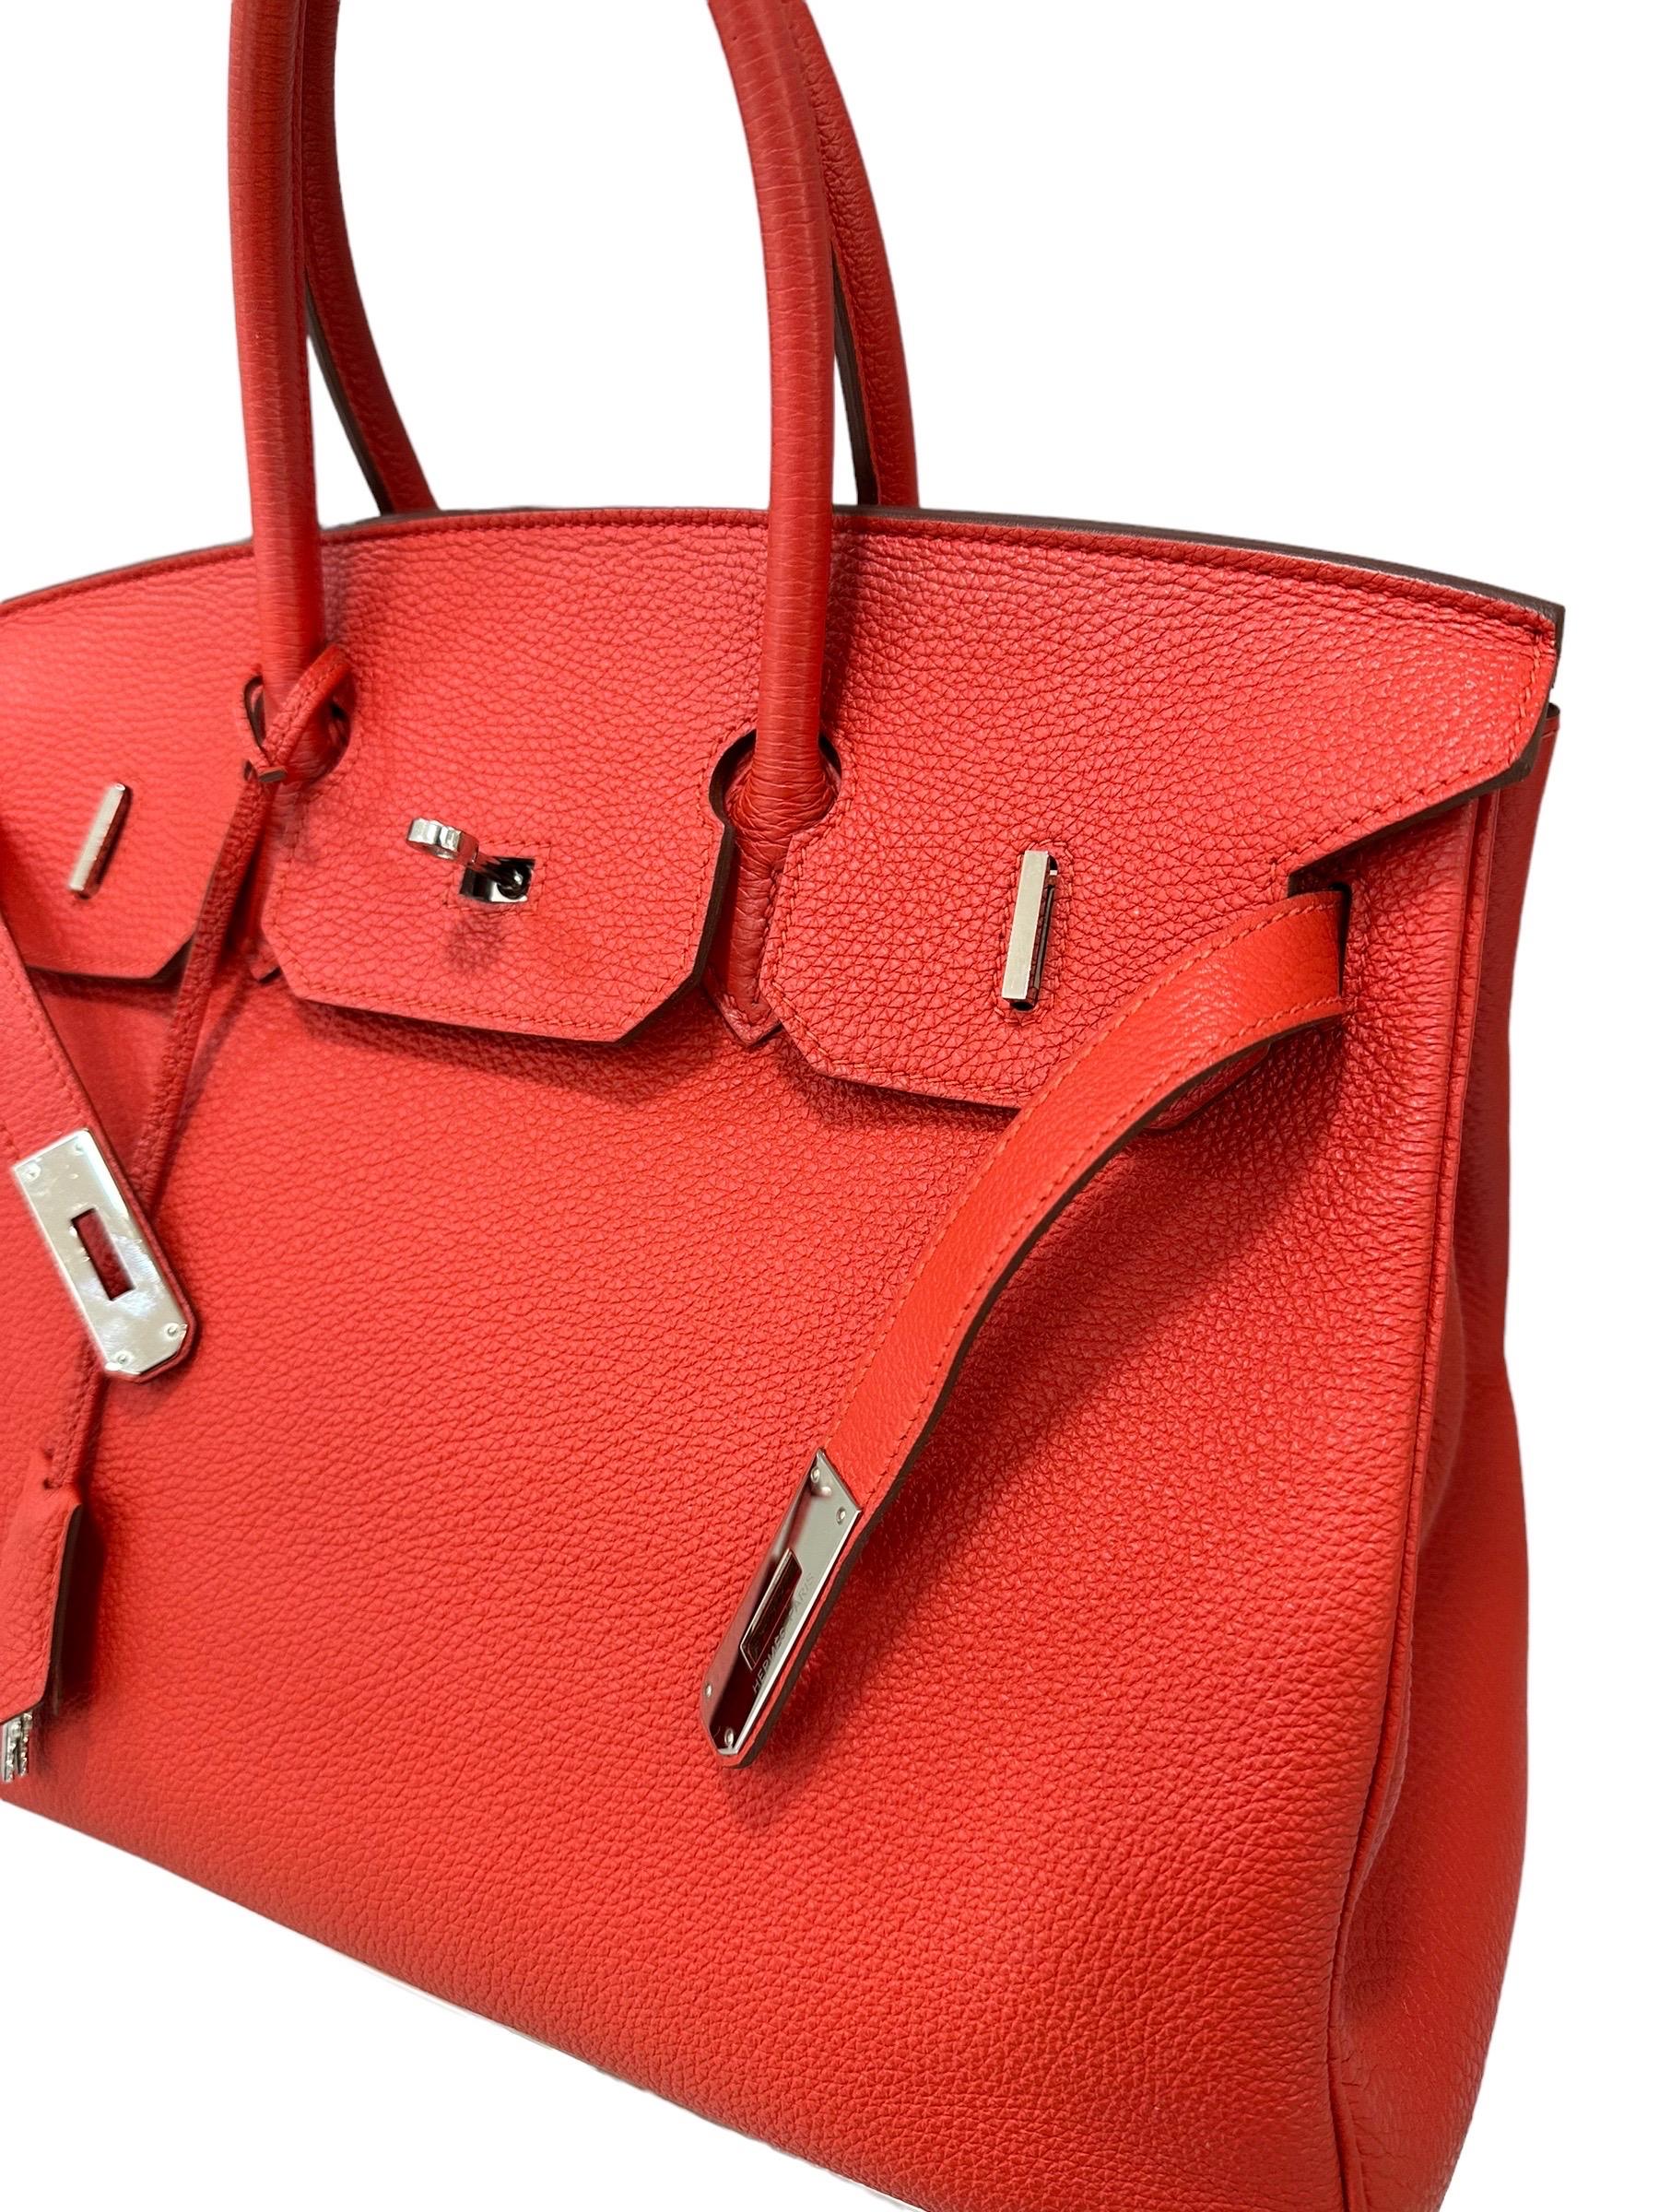 2011 Hermès Birkin 35 Togo Leather Rouge Capucine Top Handle Bag en vente 1